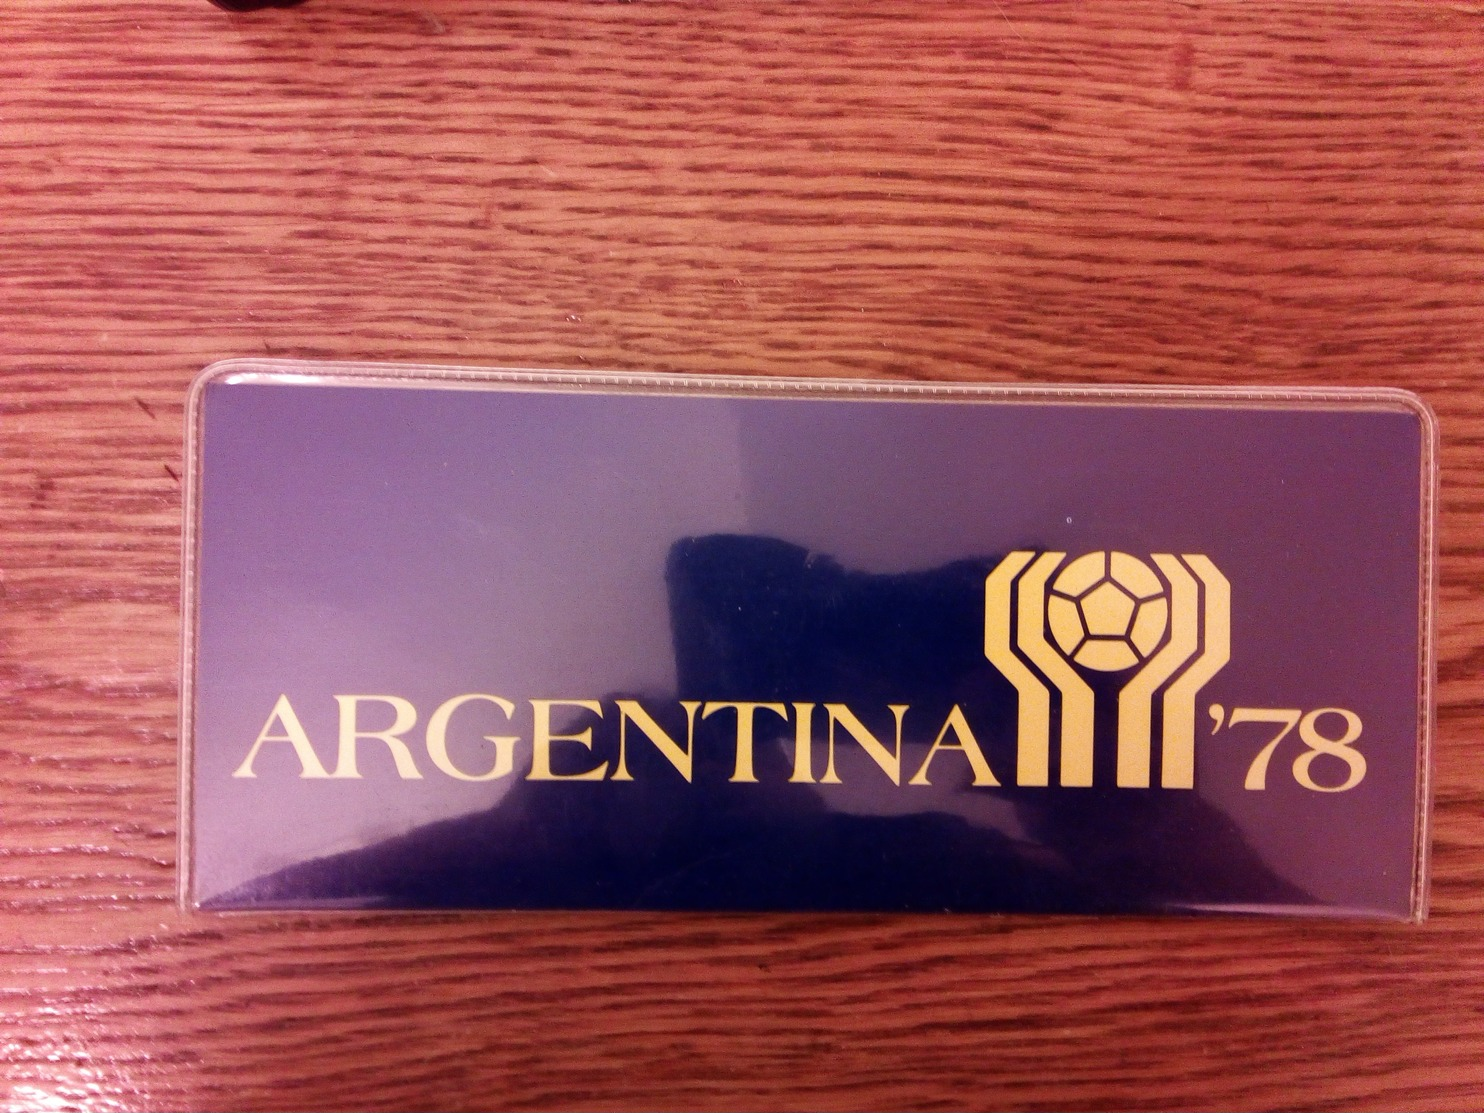 JUEGO COMPLETO DE 6 MONEDAS DE ARGENTINA DEL AÑO 1978 MUNDIAL ARGENTINA-78 (COIN) PLATA,SILVER,ARGENT. - Argentine